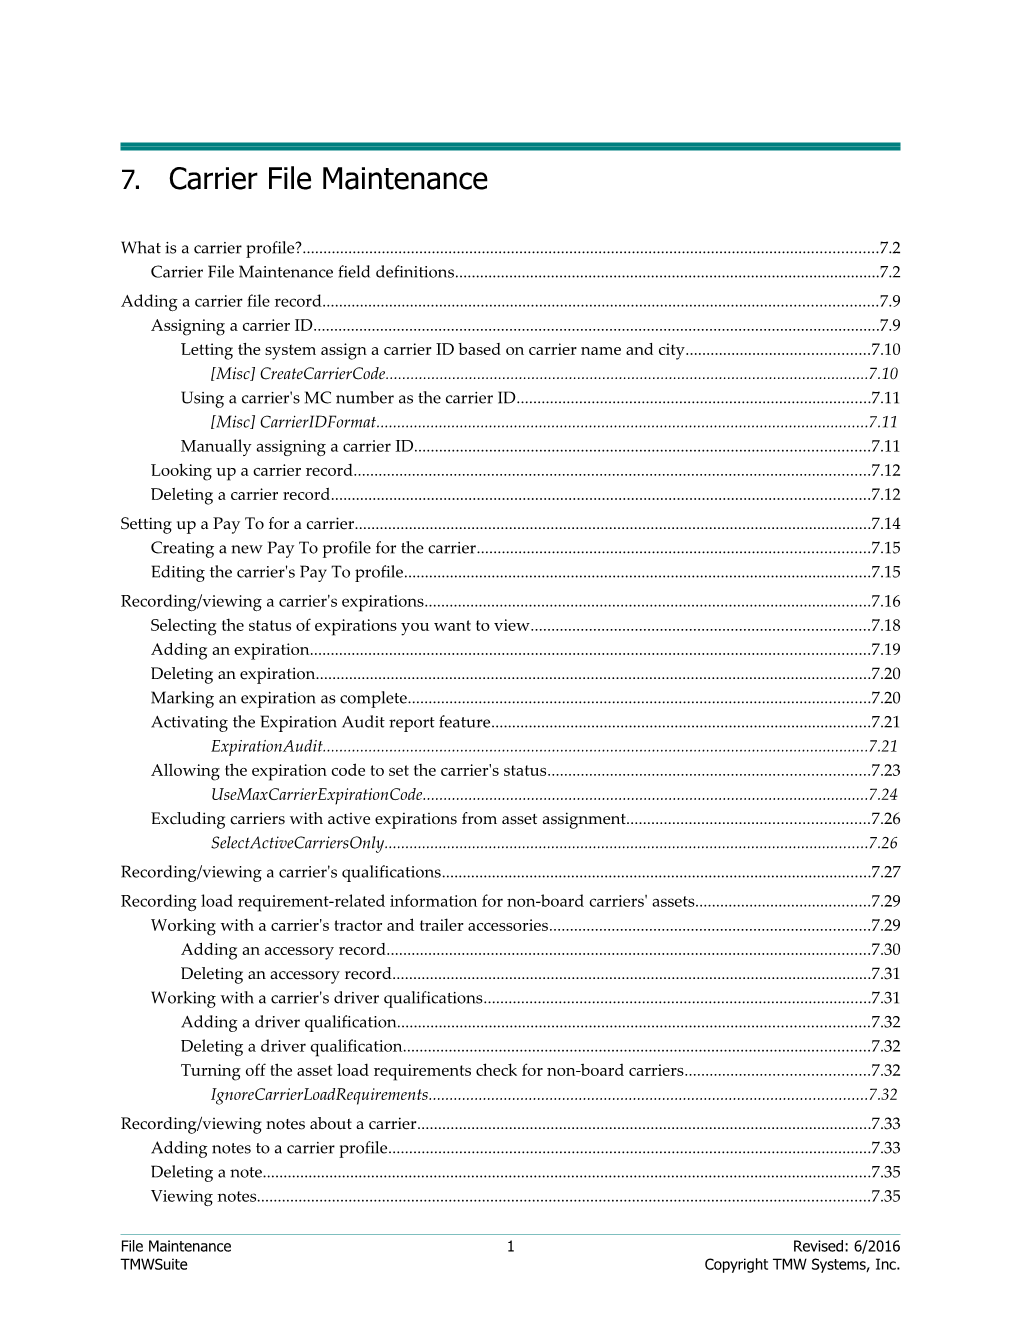 Carrier File Maintenance